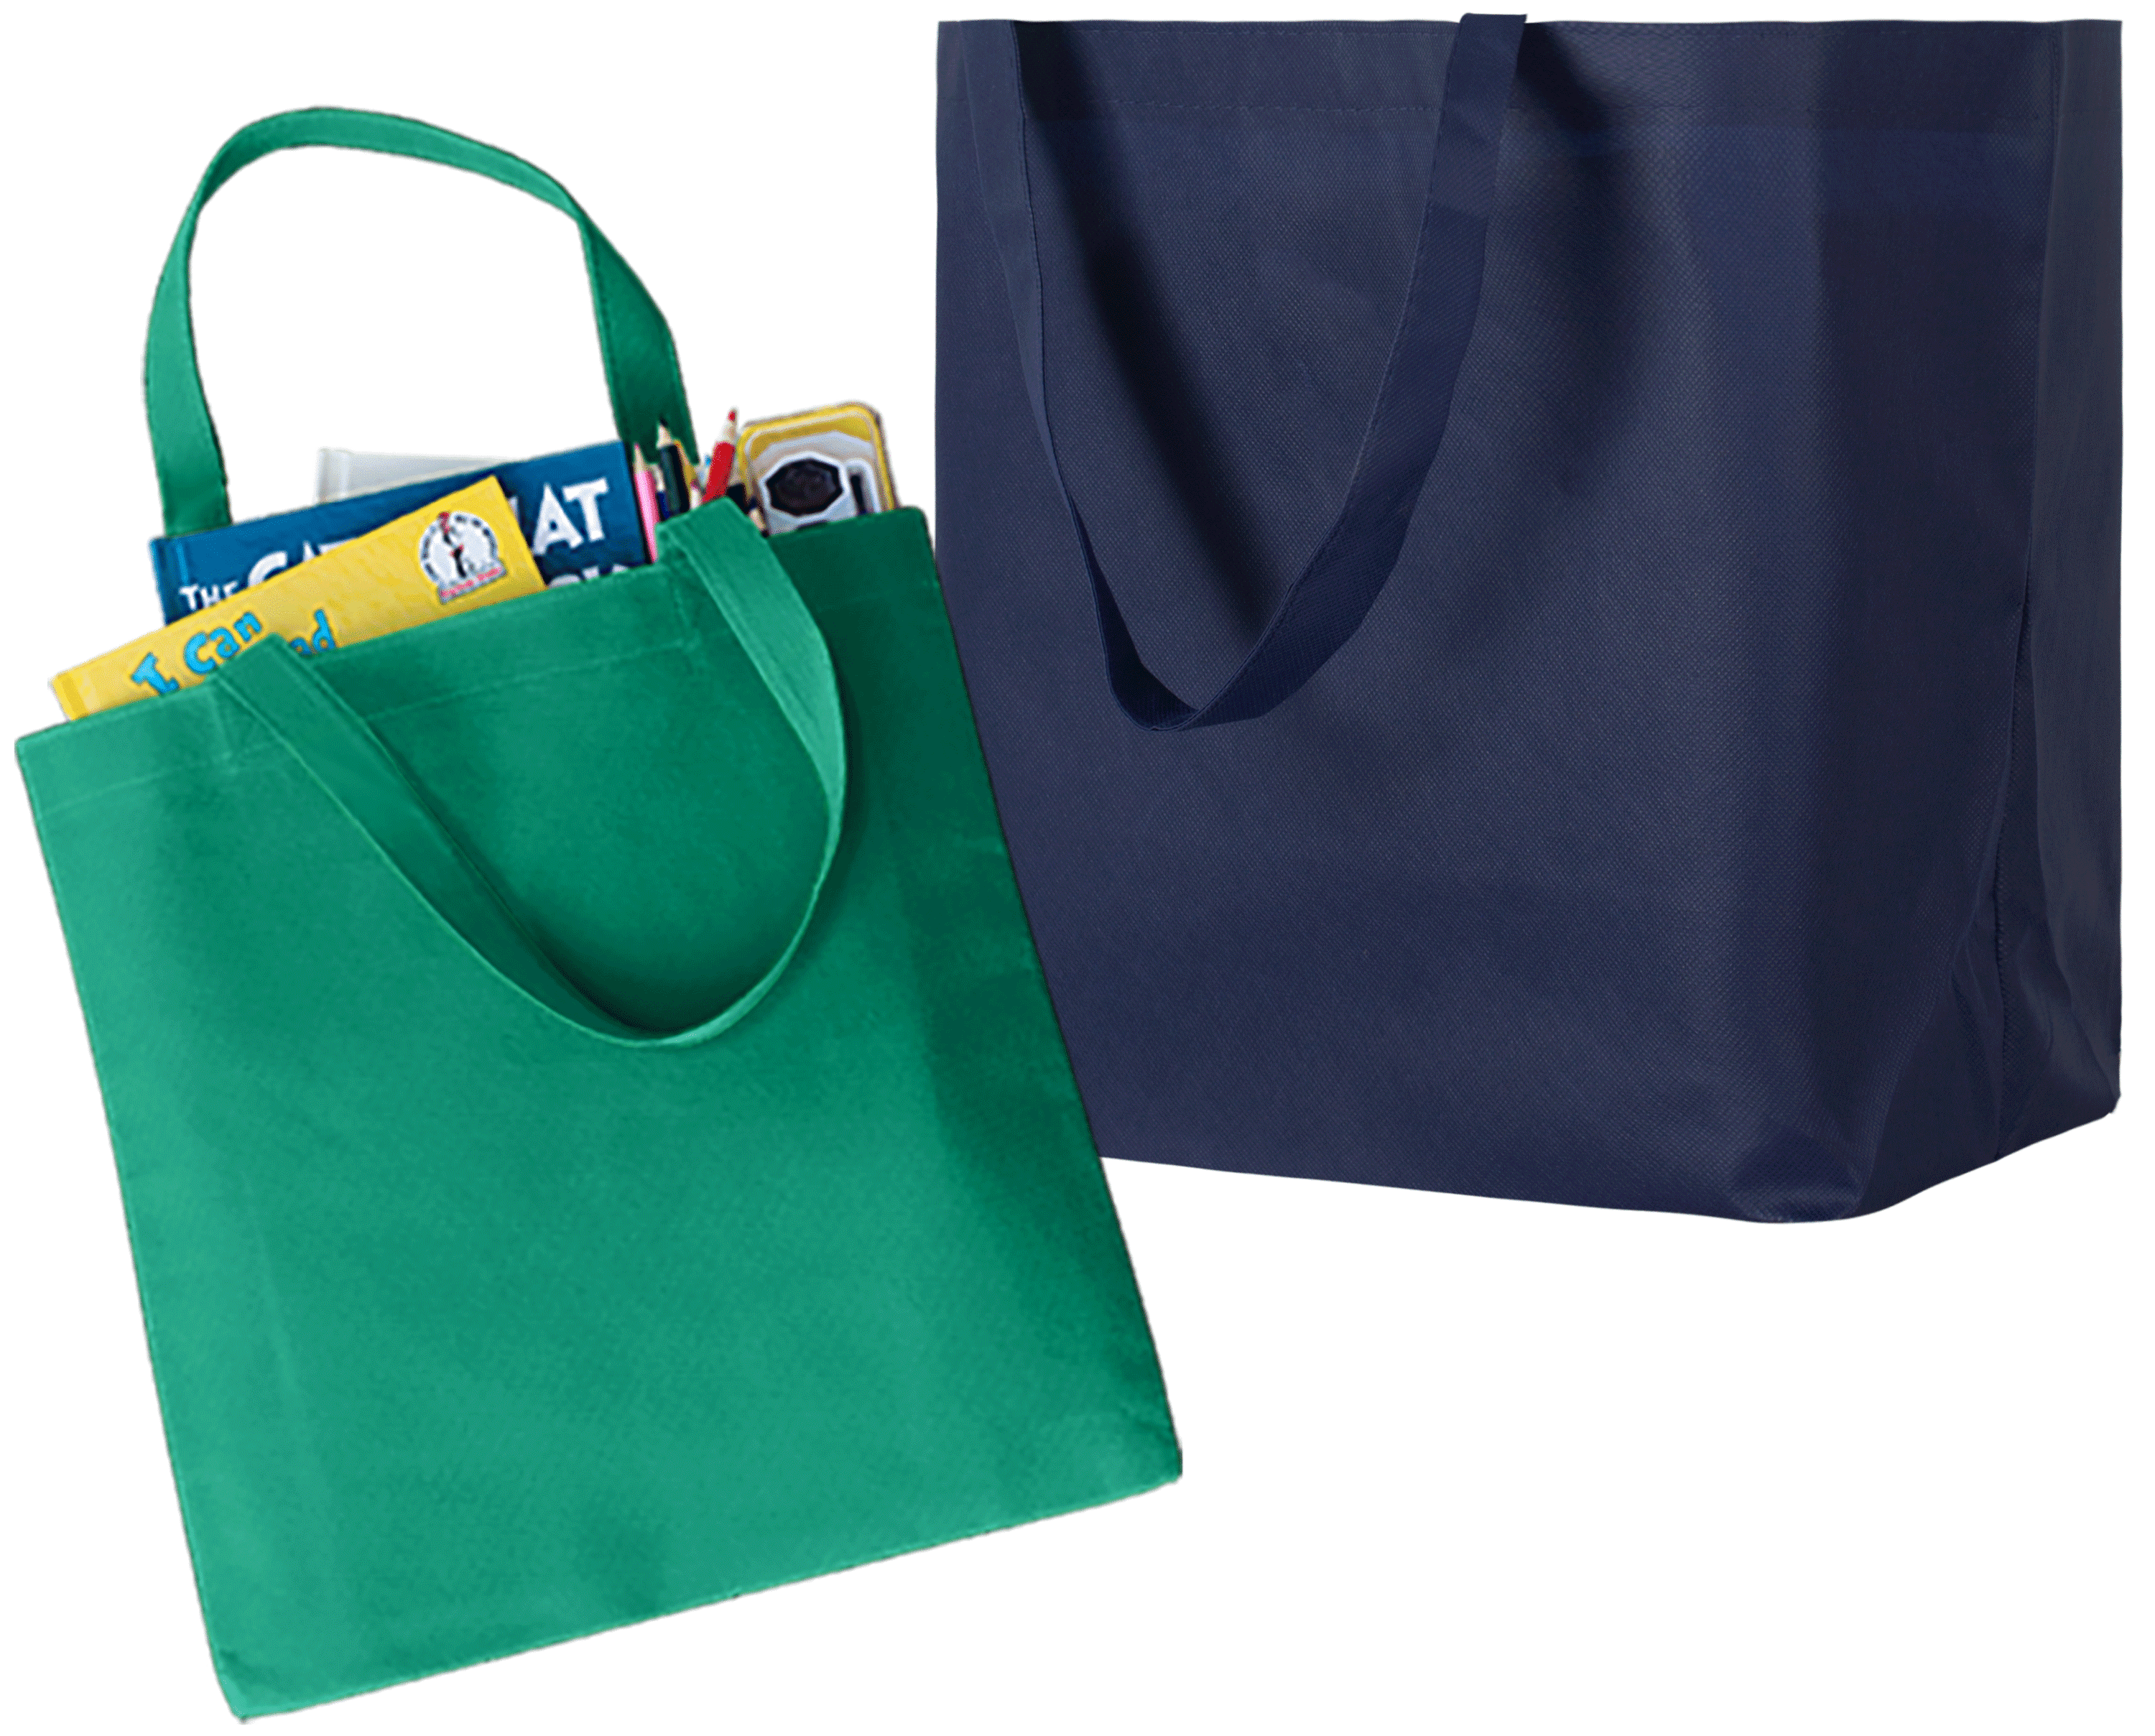 Jumbo Tote Bags,Wholesale canvas tote bags Large,Tote Bag Long Handles